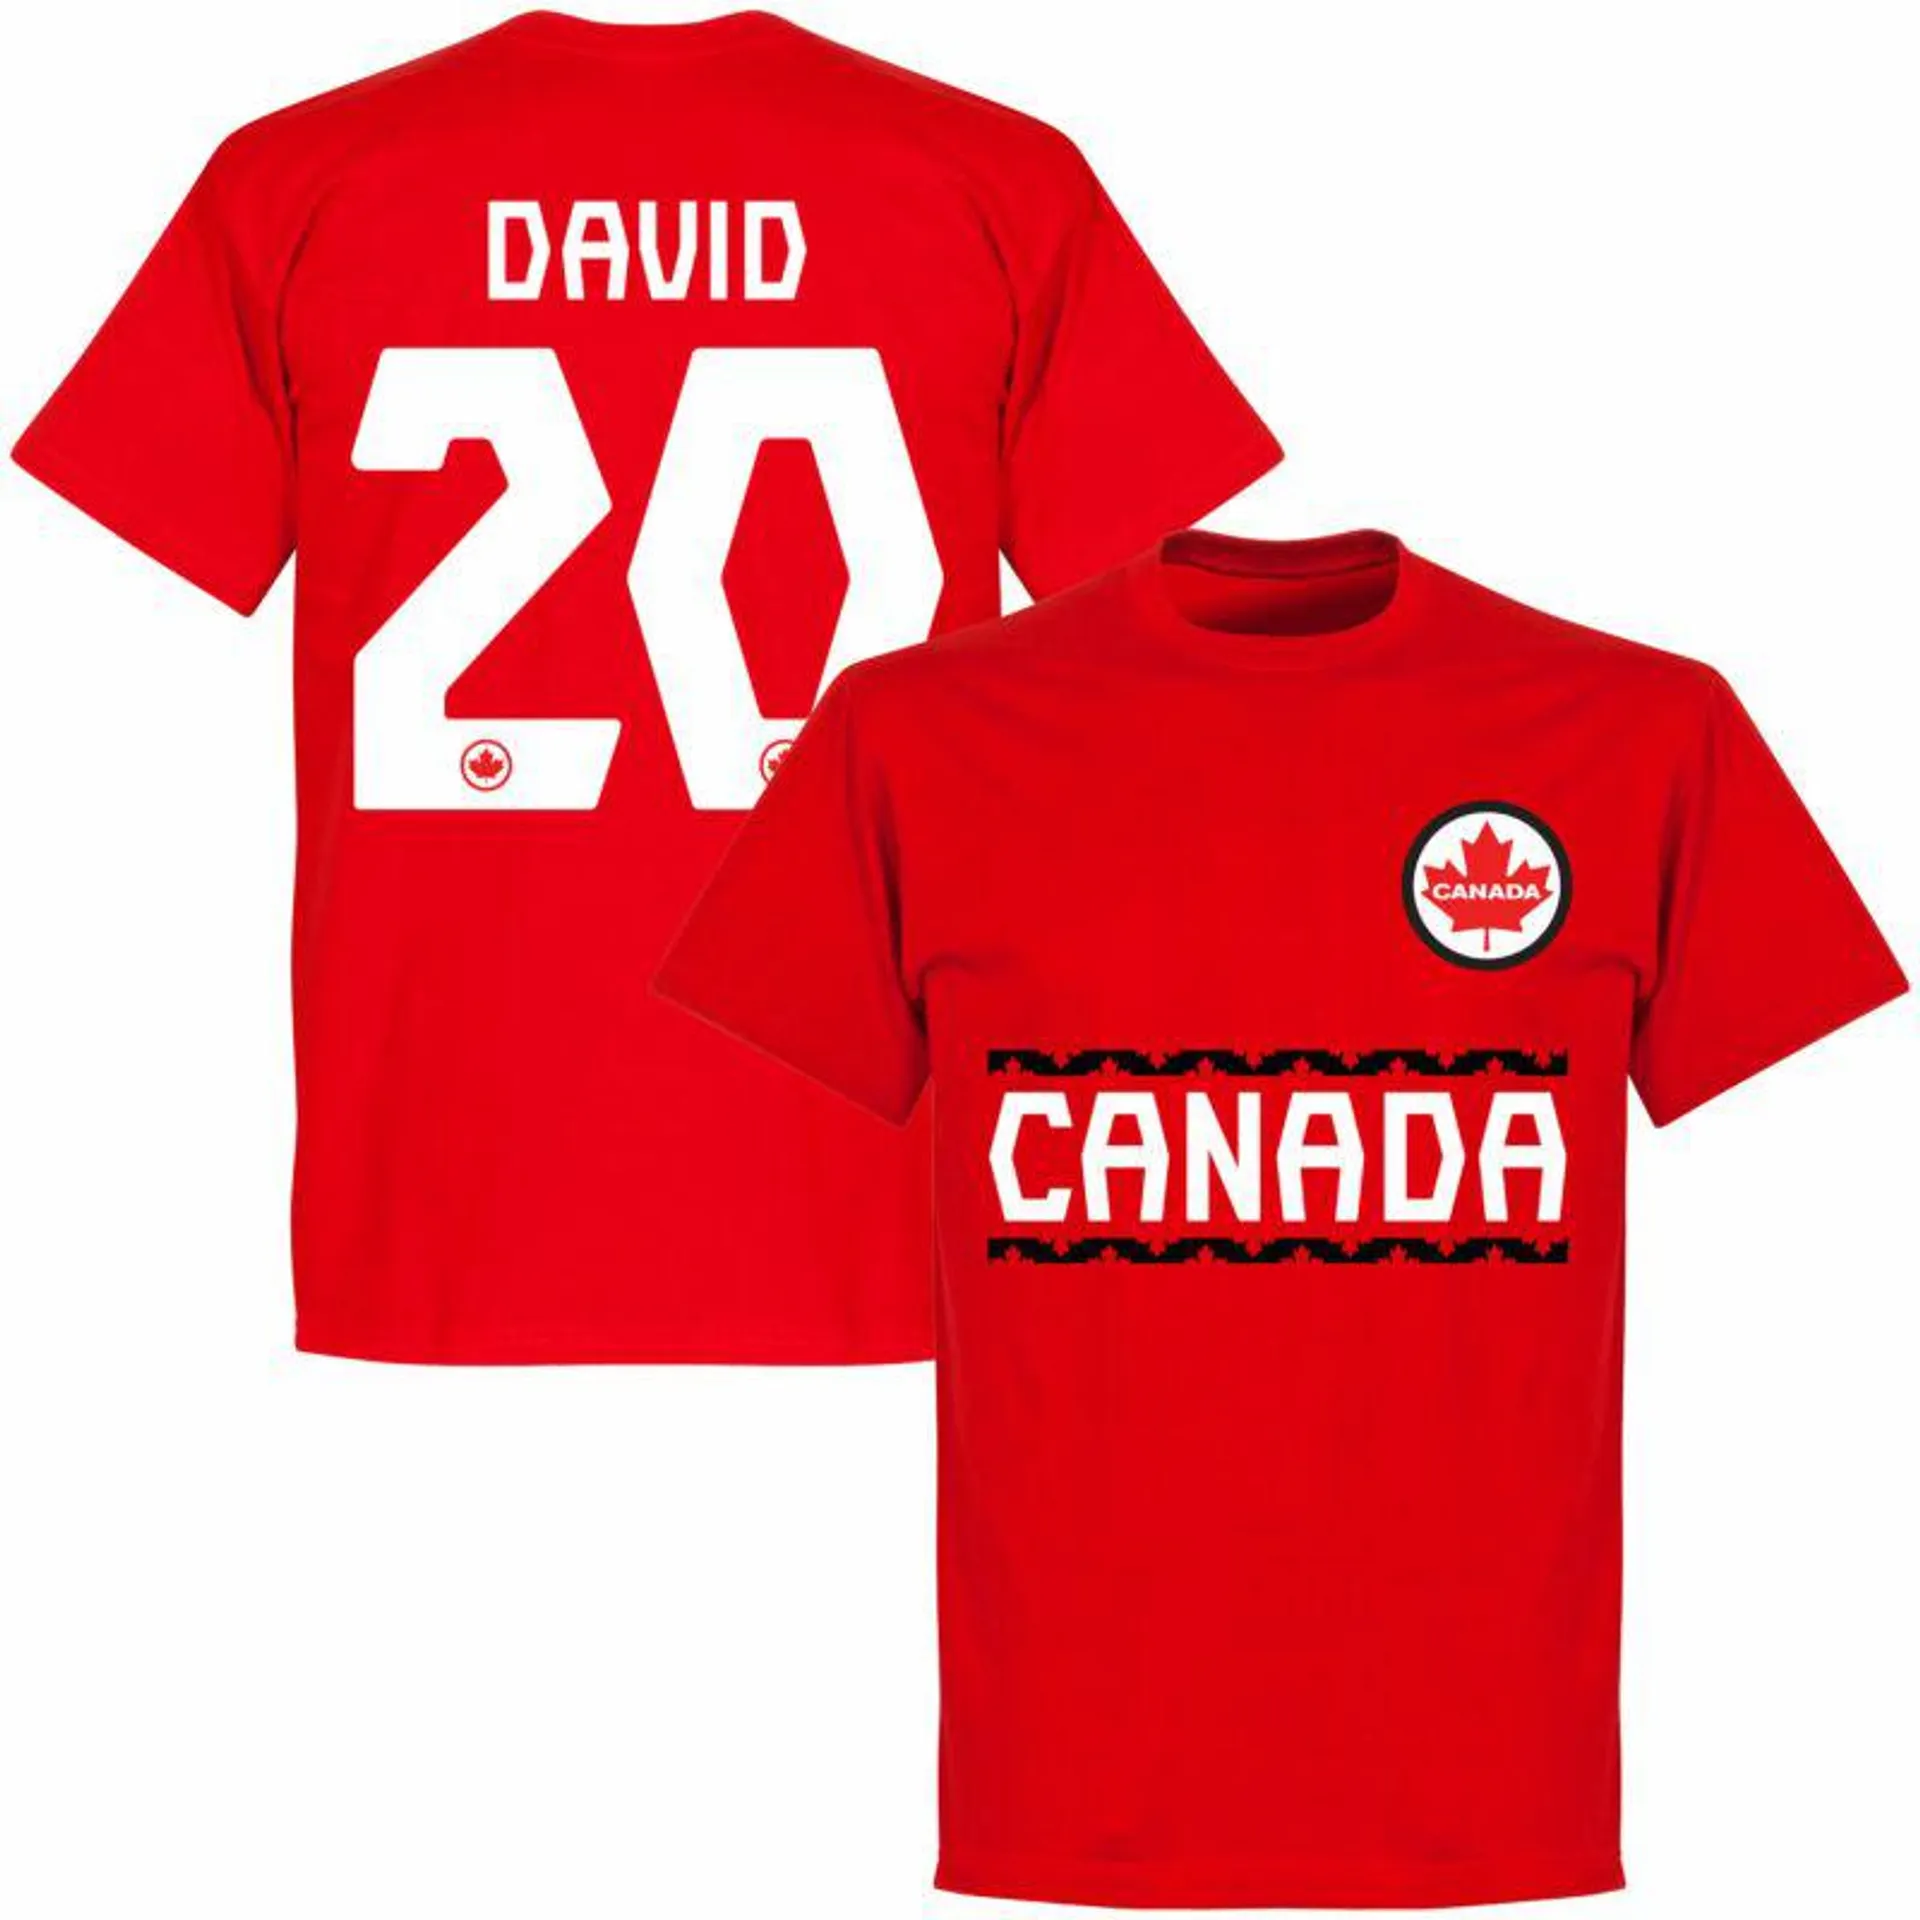 Canada Team David 20 T-shirt - Red